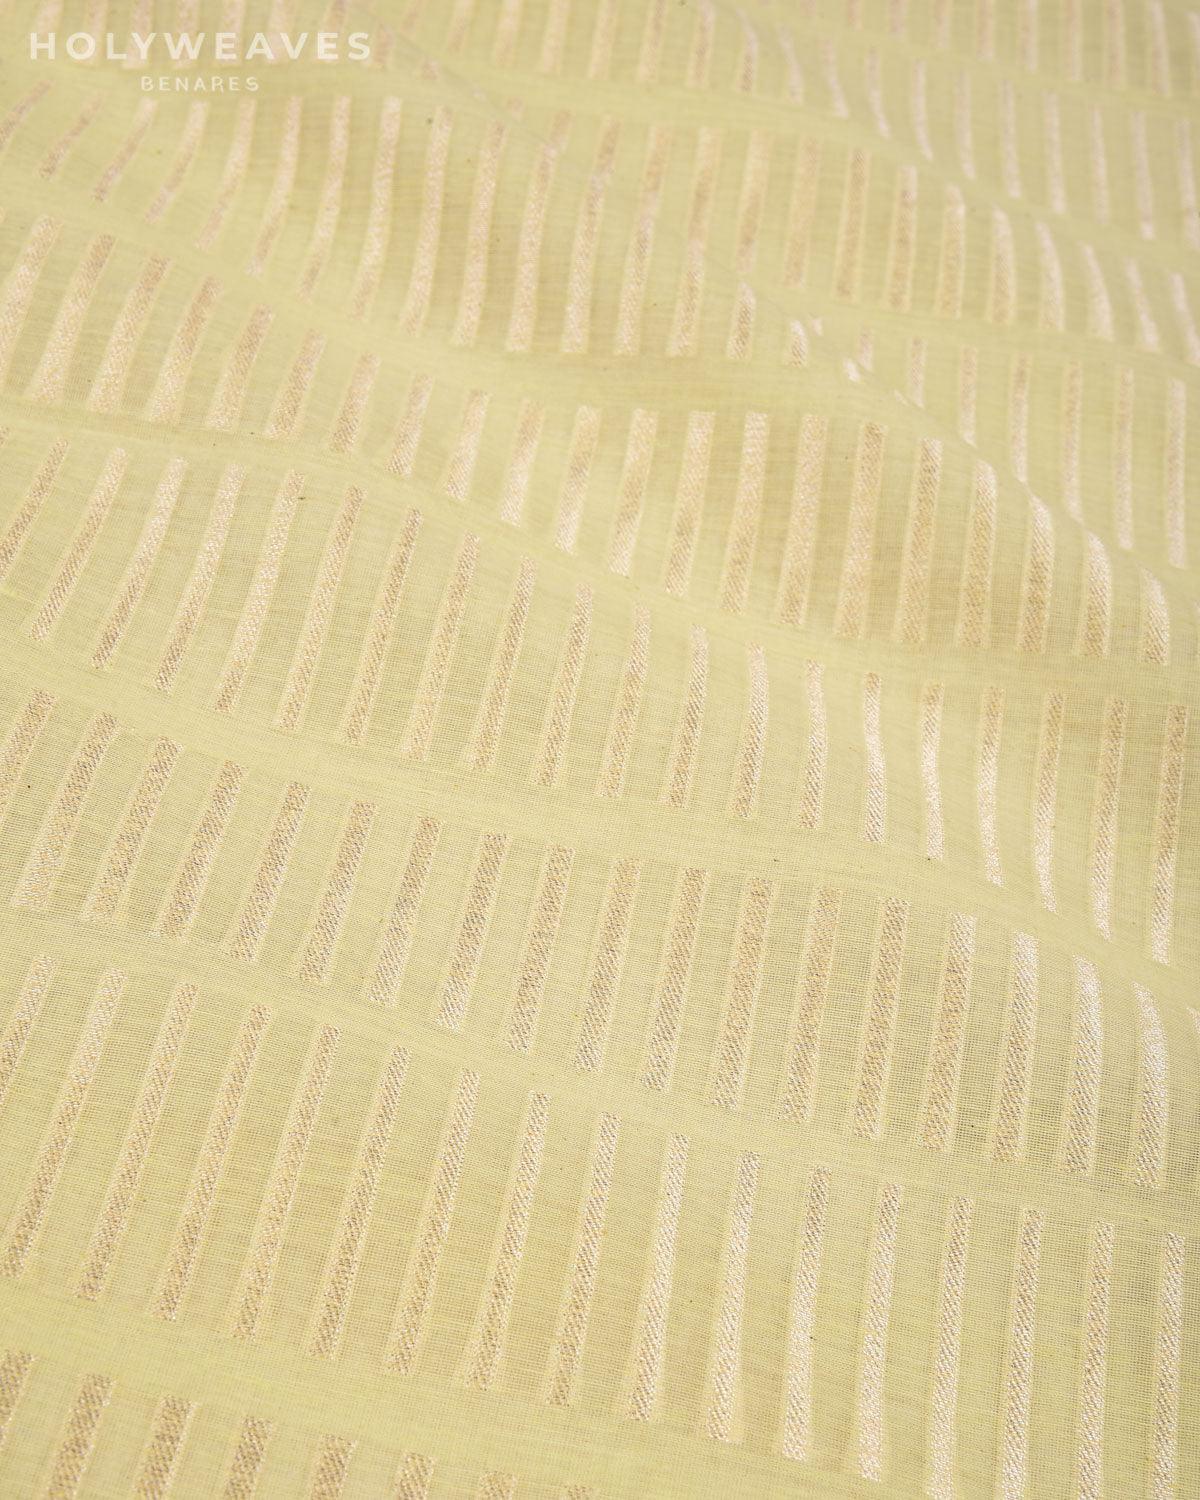 Honeydew Green Banarasi Gold Zari Piano Stripes Cutwork Brocade Handwoven Cotton Silk Fabric - By HolyWeaves, Benares